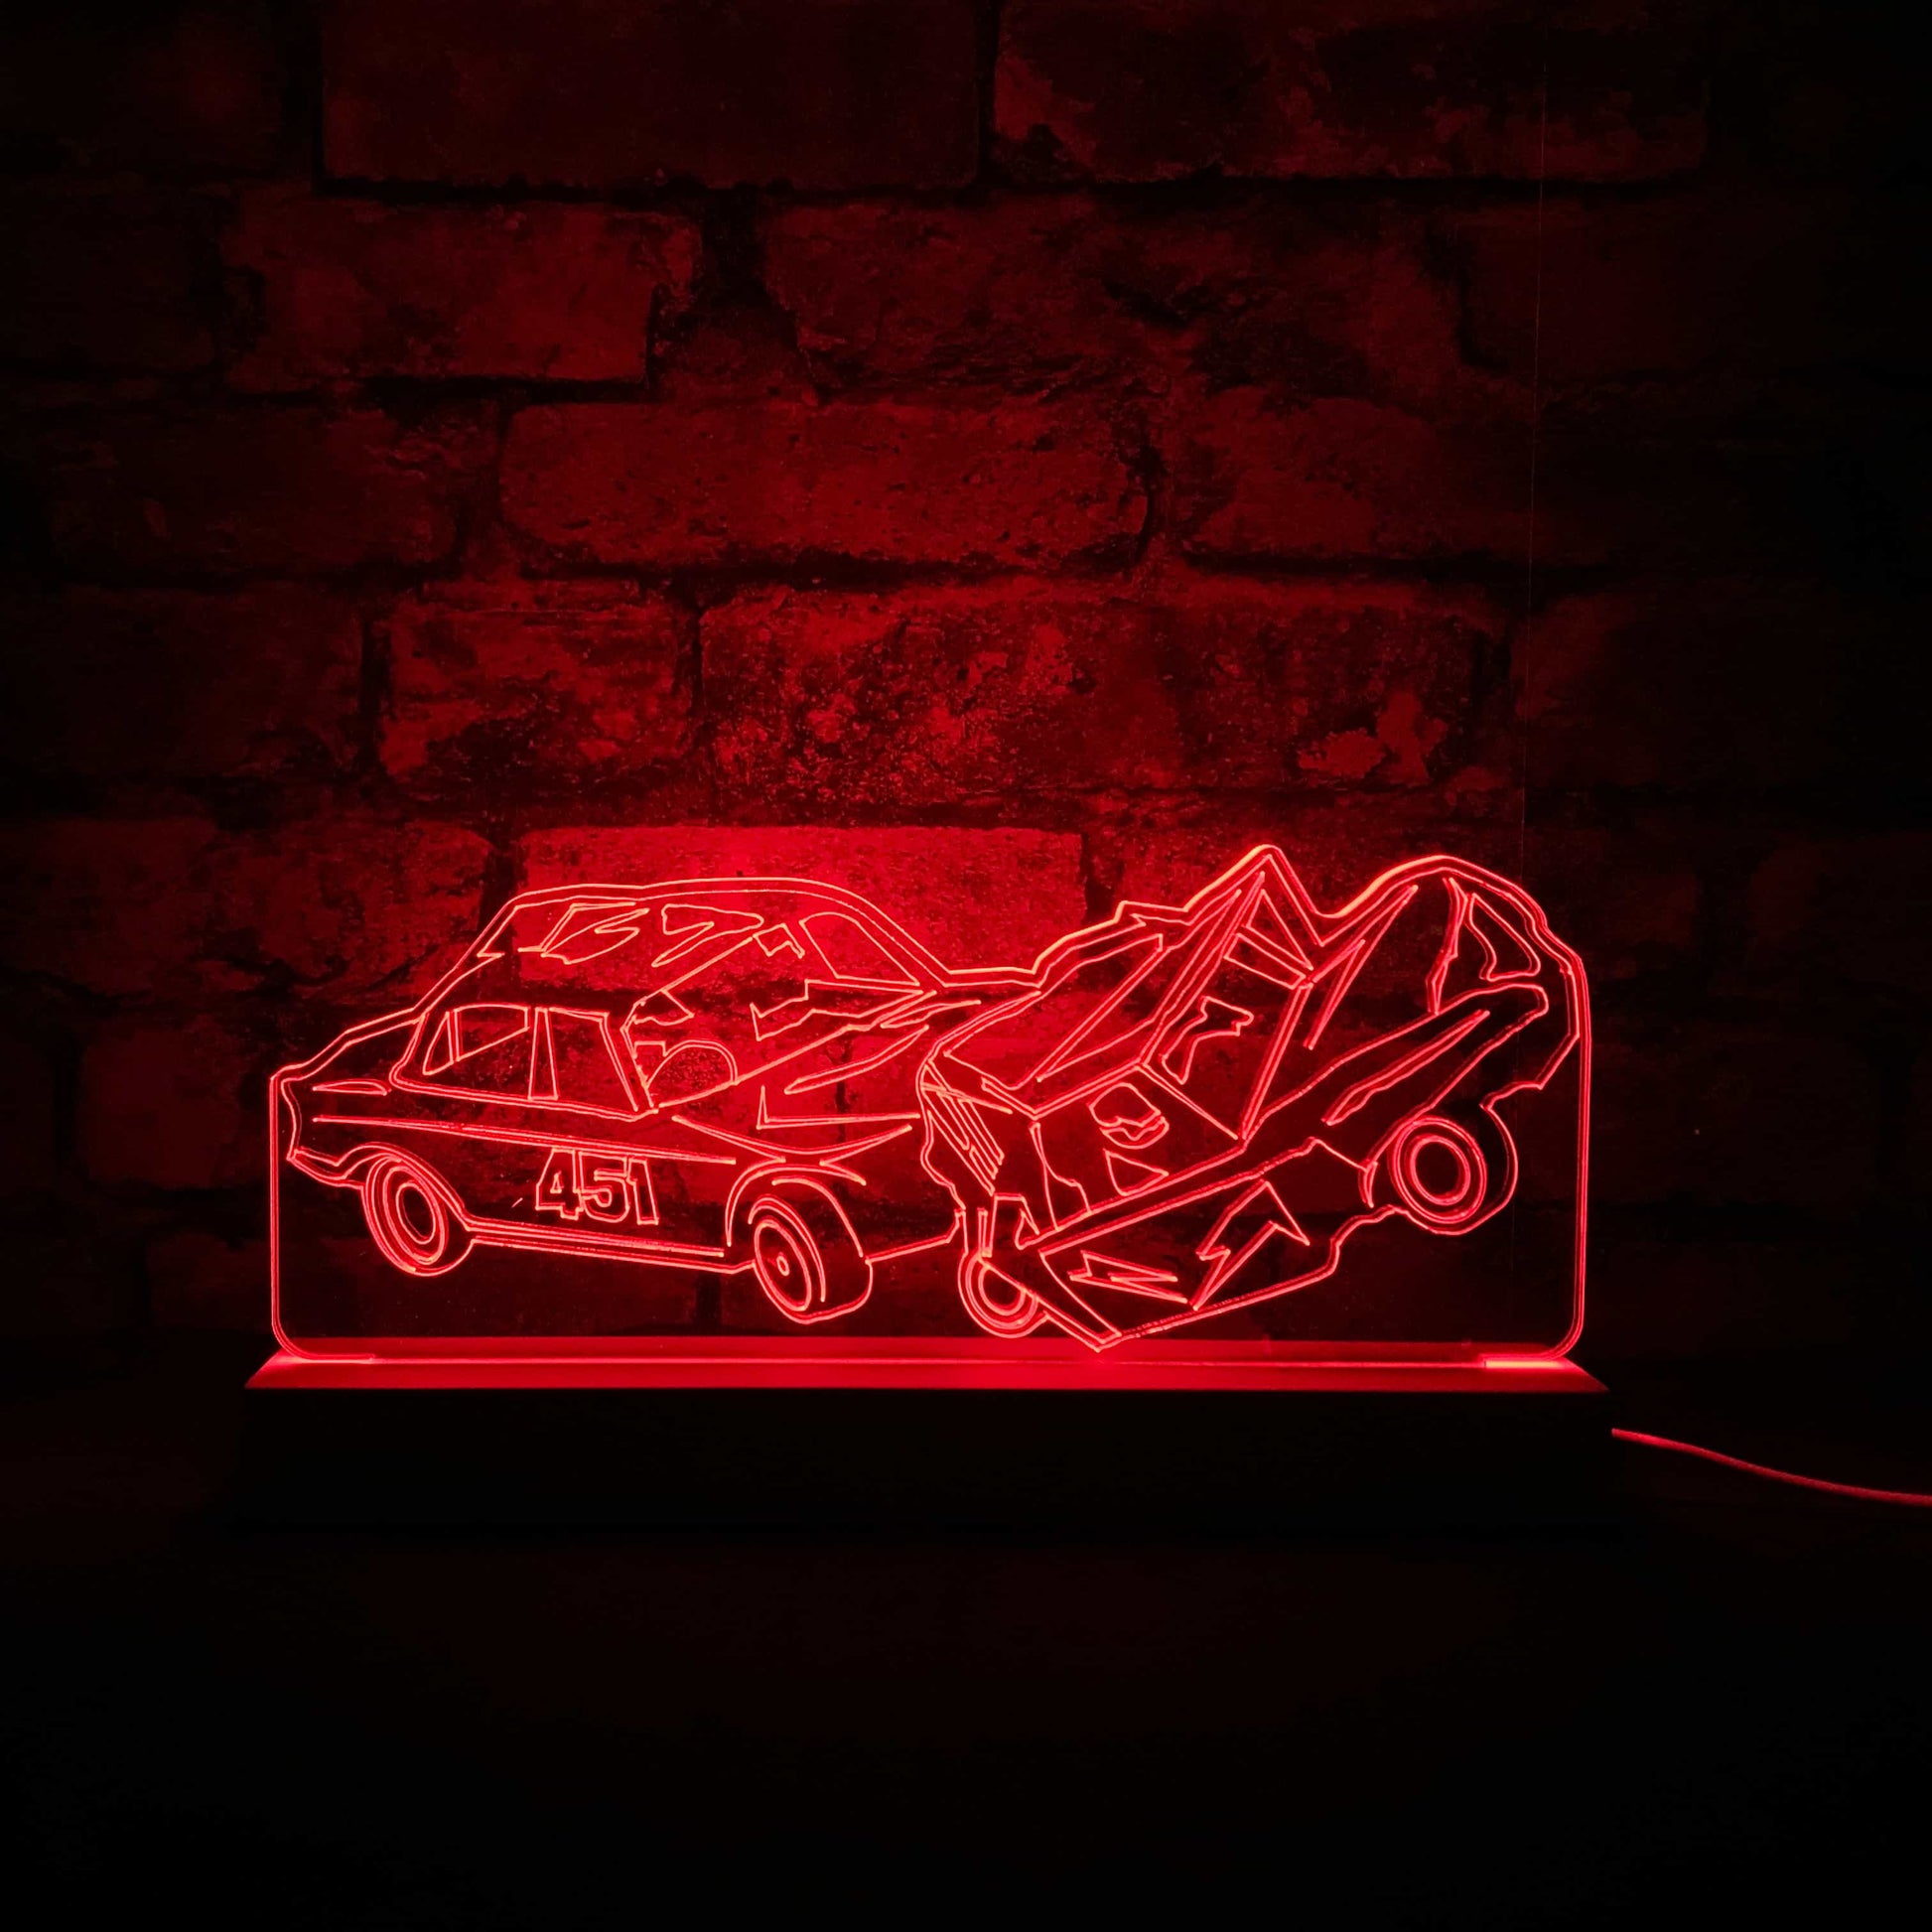 Banger Crash Night Light - Large Wooden Base - Night Lights & Ambient Lighting - Stock Car & Banger Toy Tracks